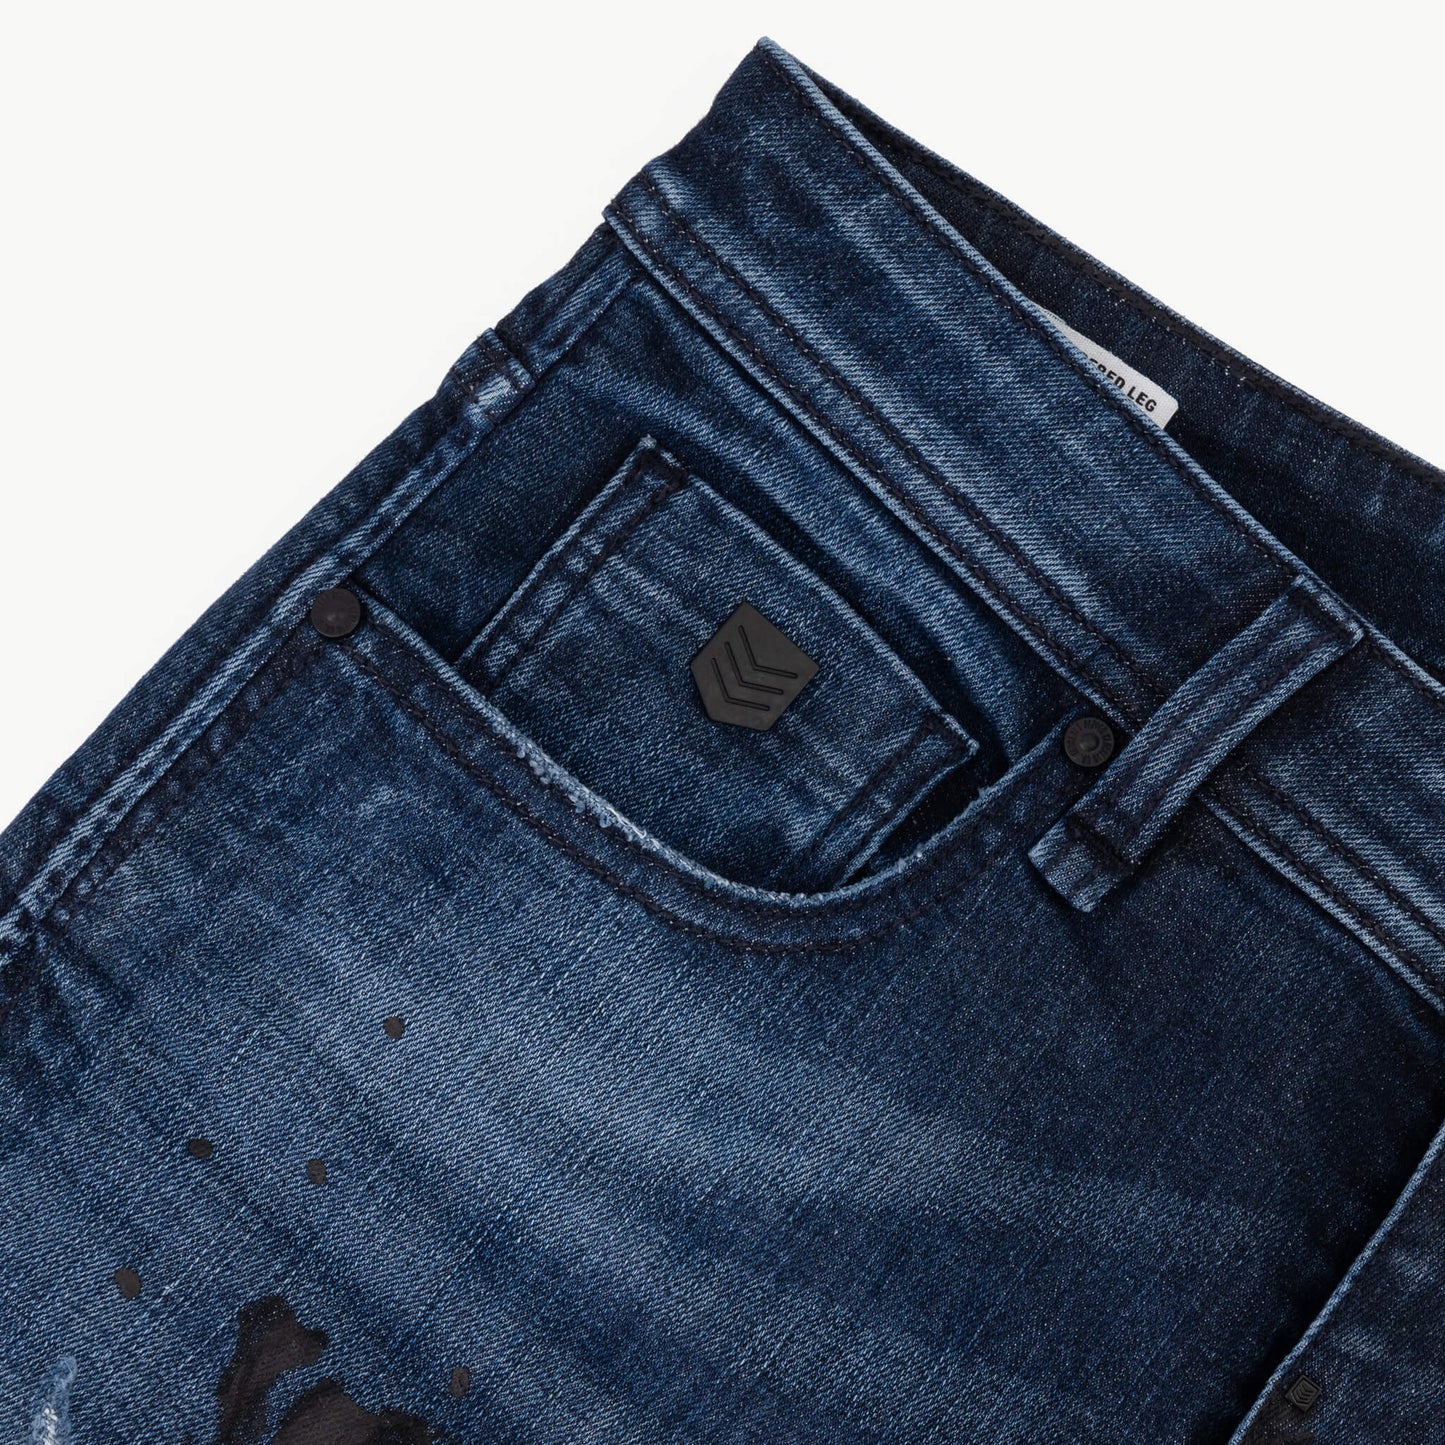 Cortana  Jeans  - Indigo